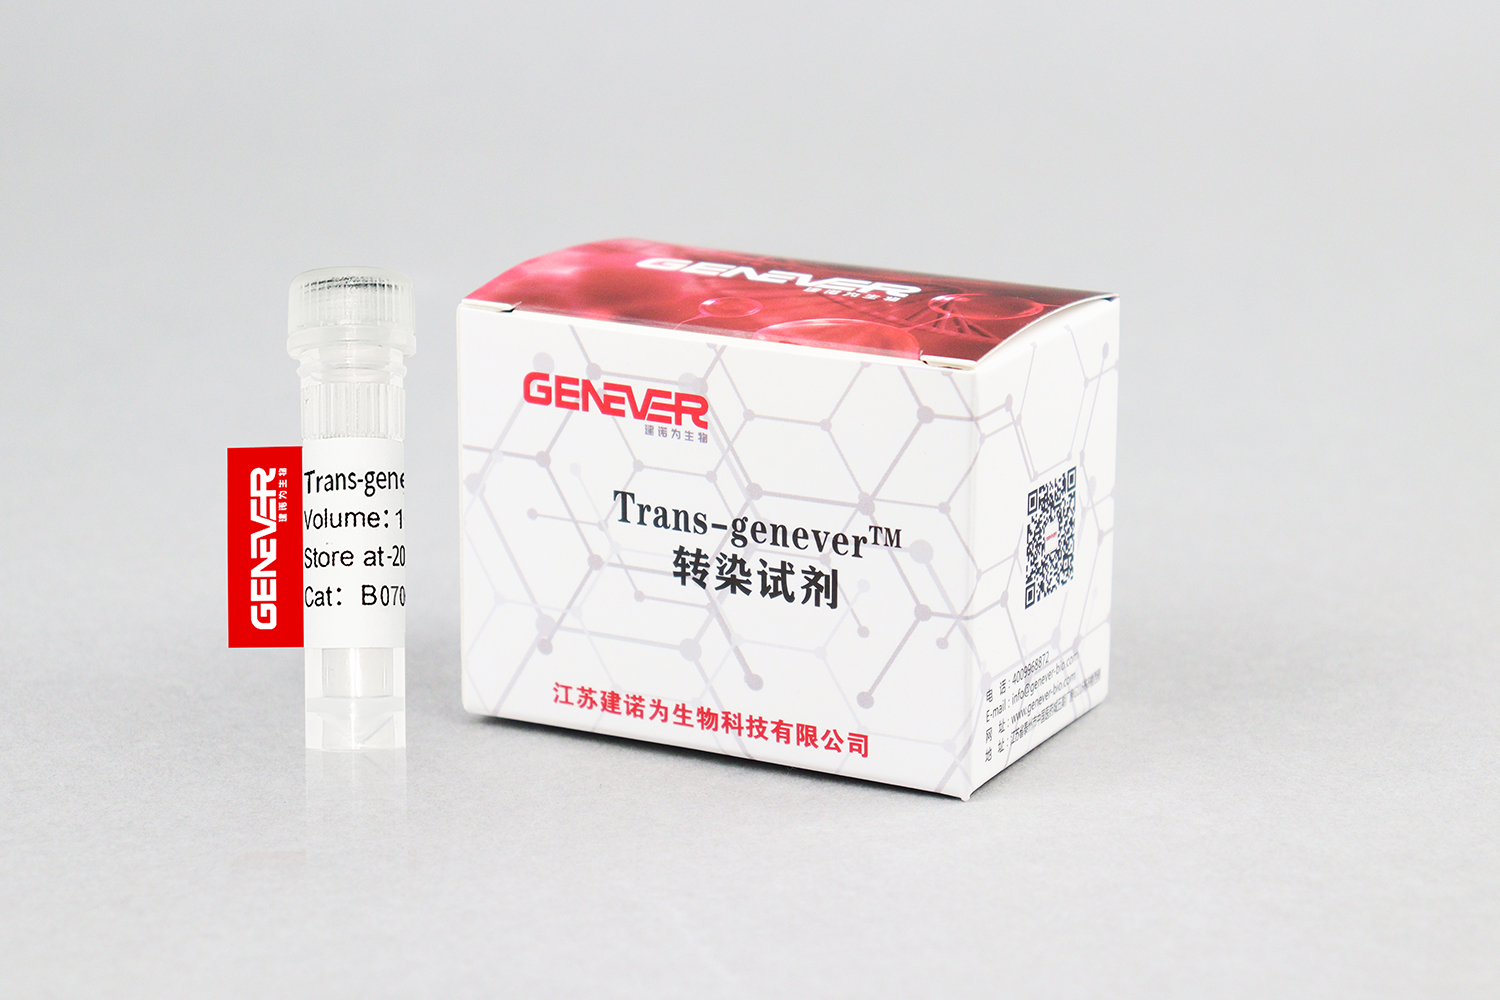 Trans-genever™ 转染试剂